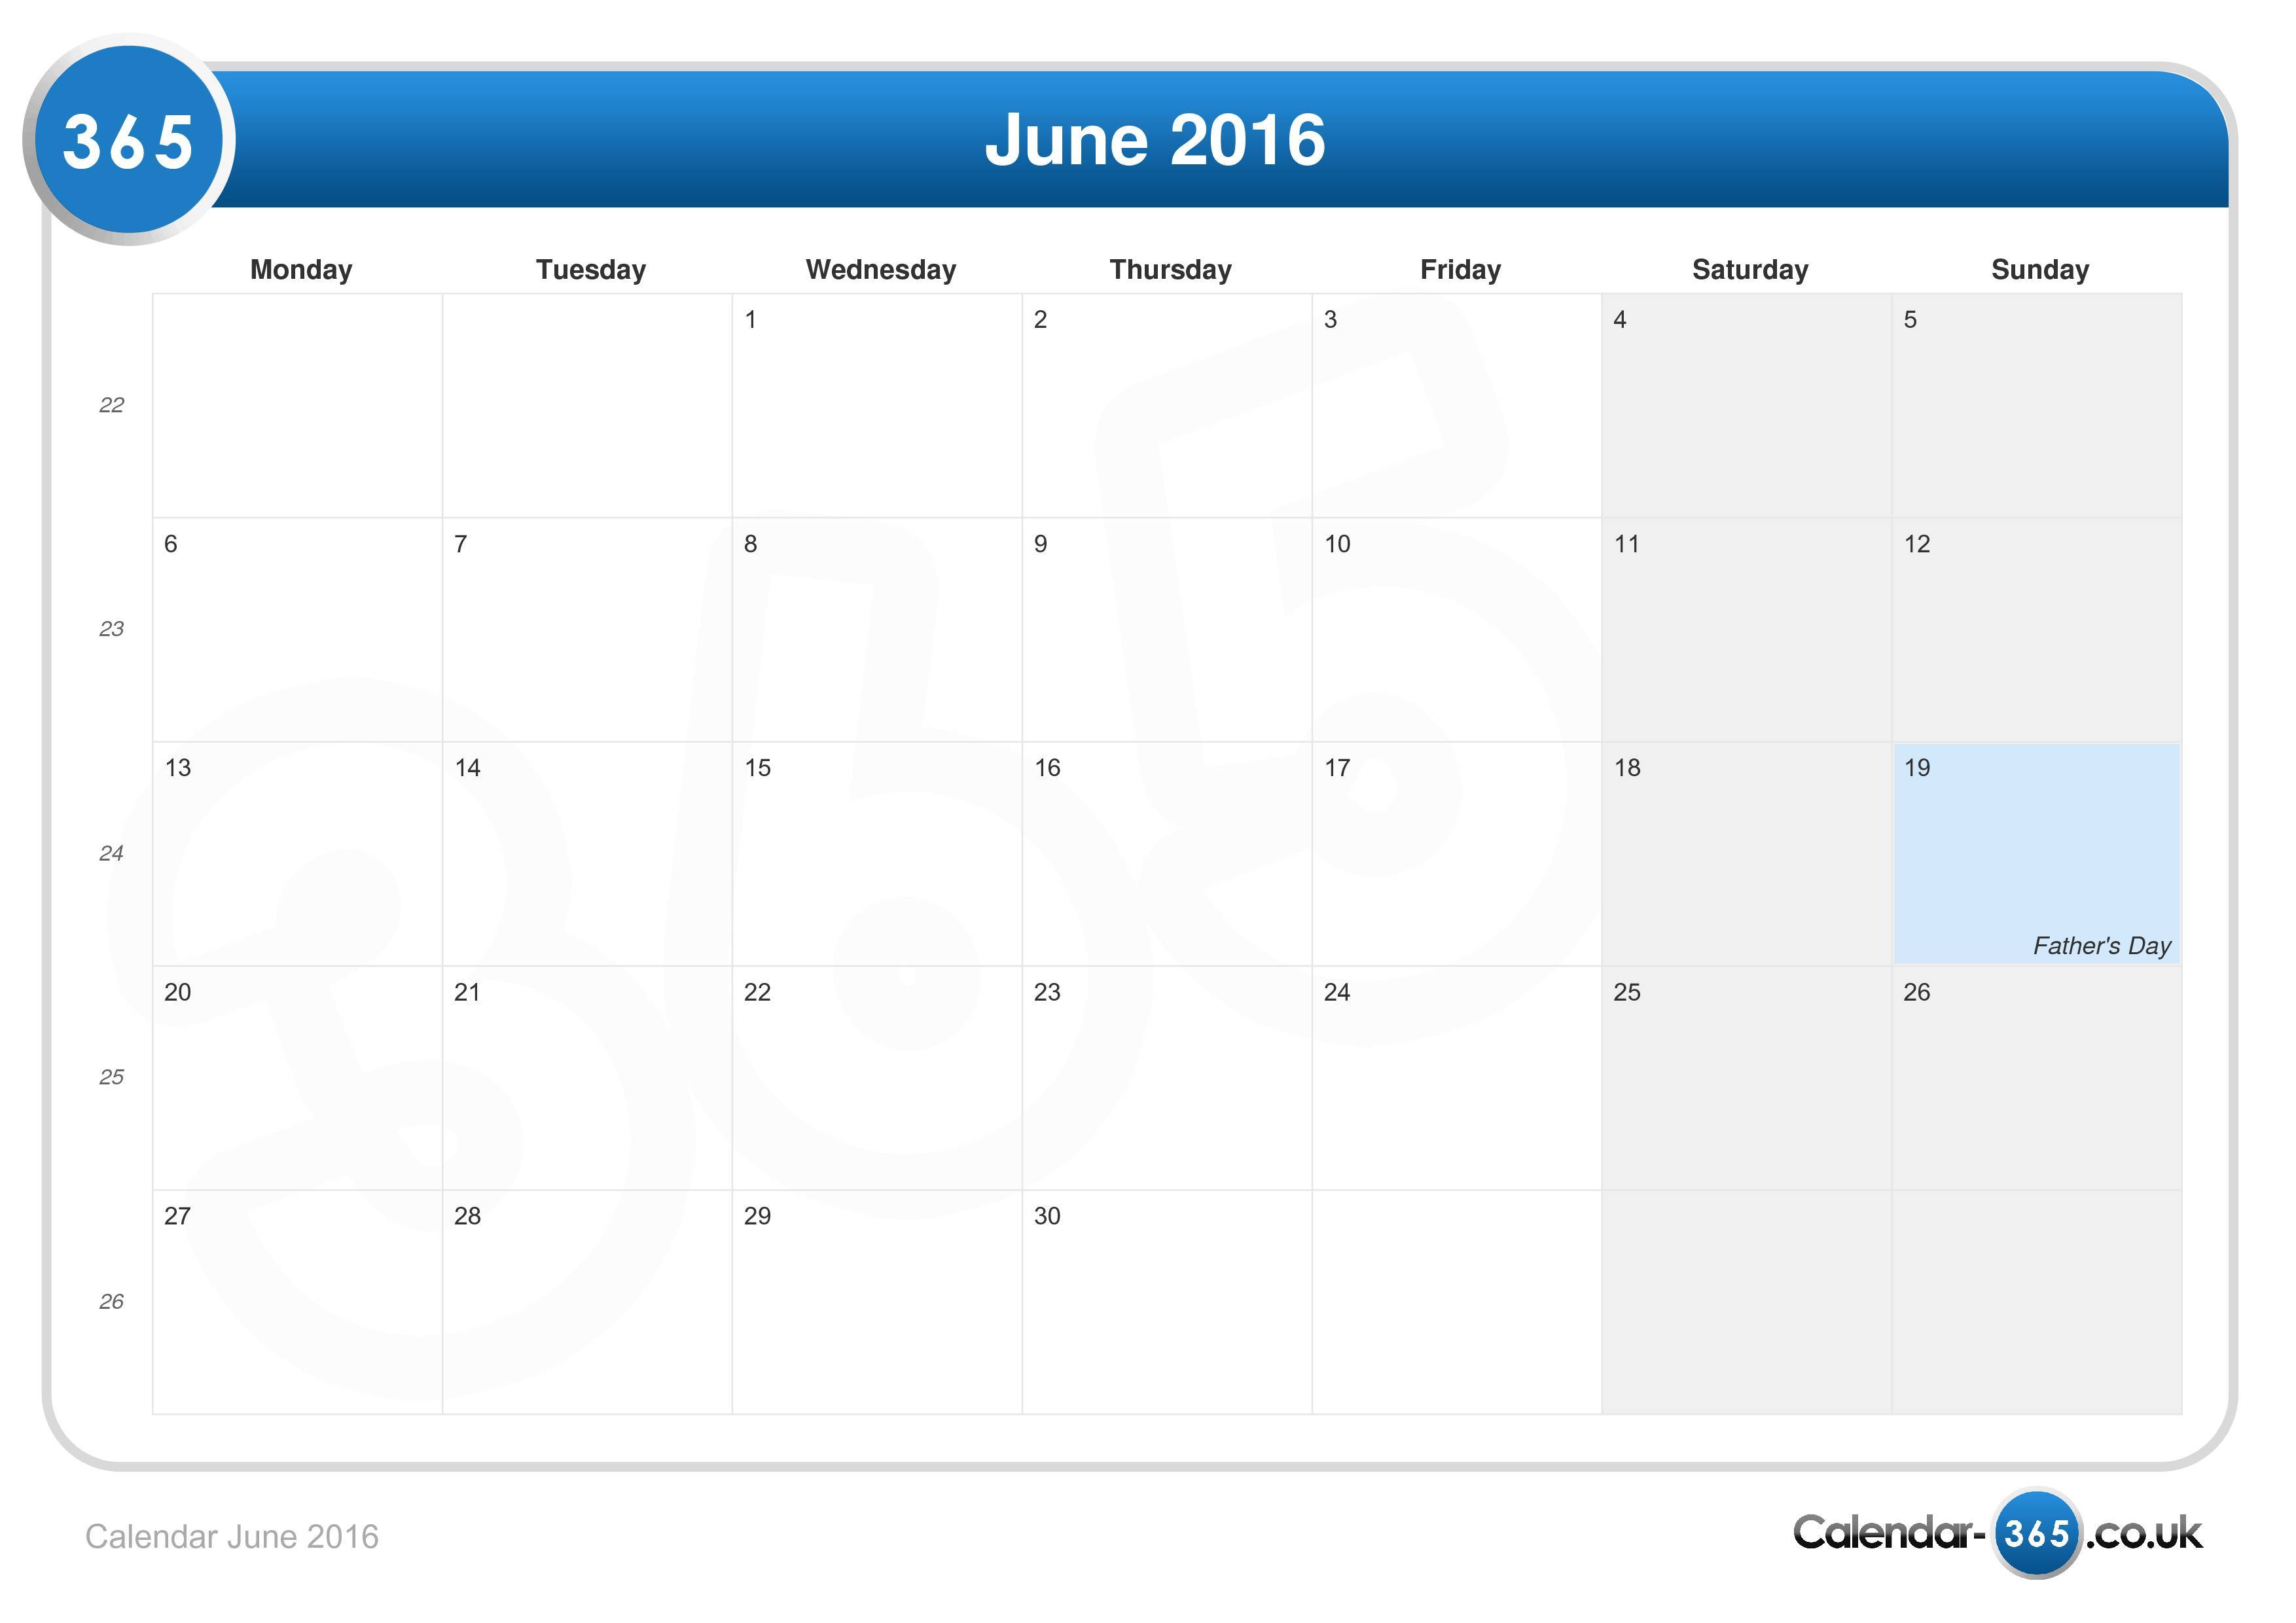 Calendar June 16